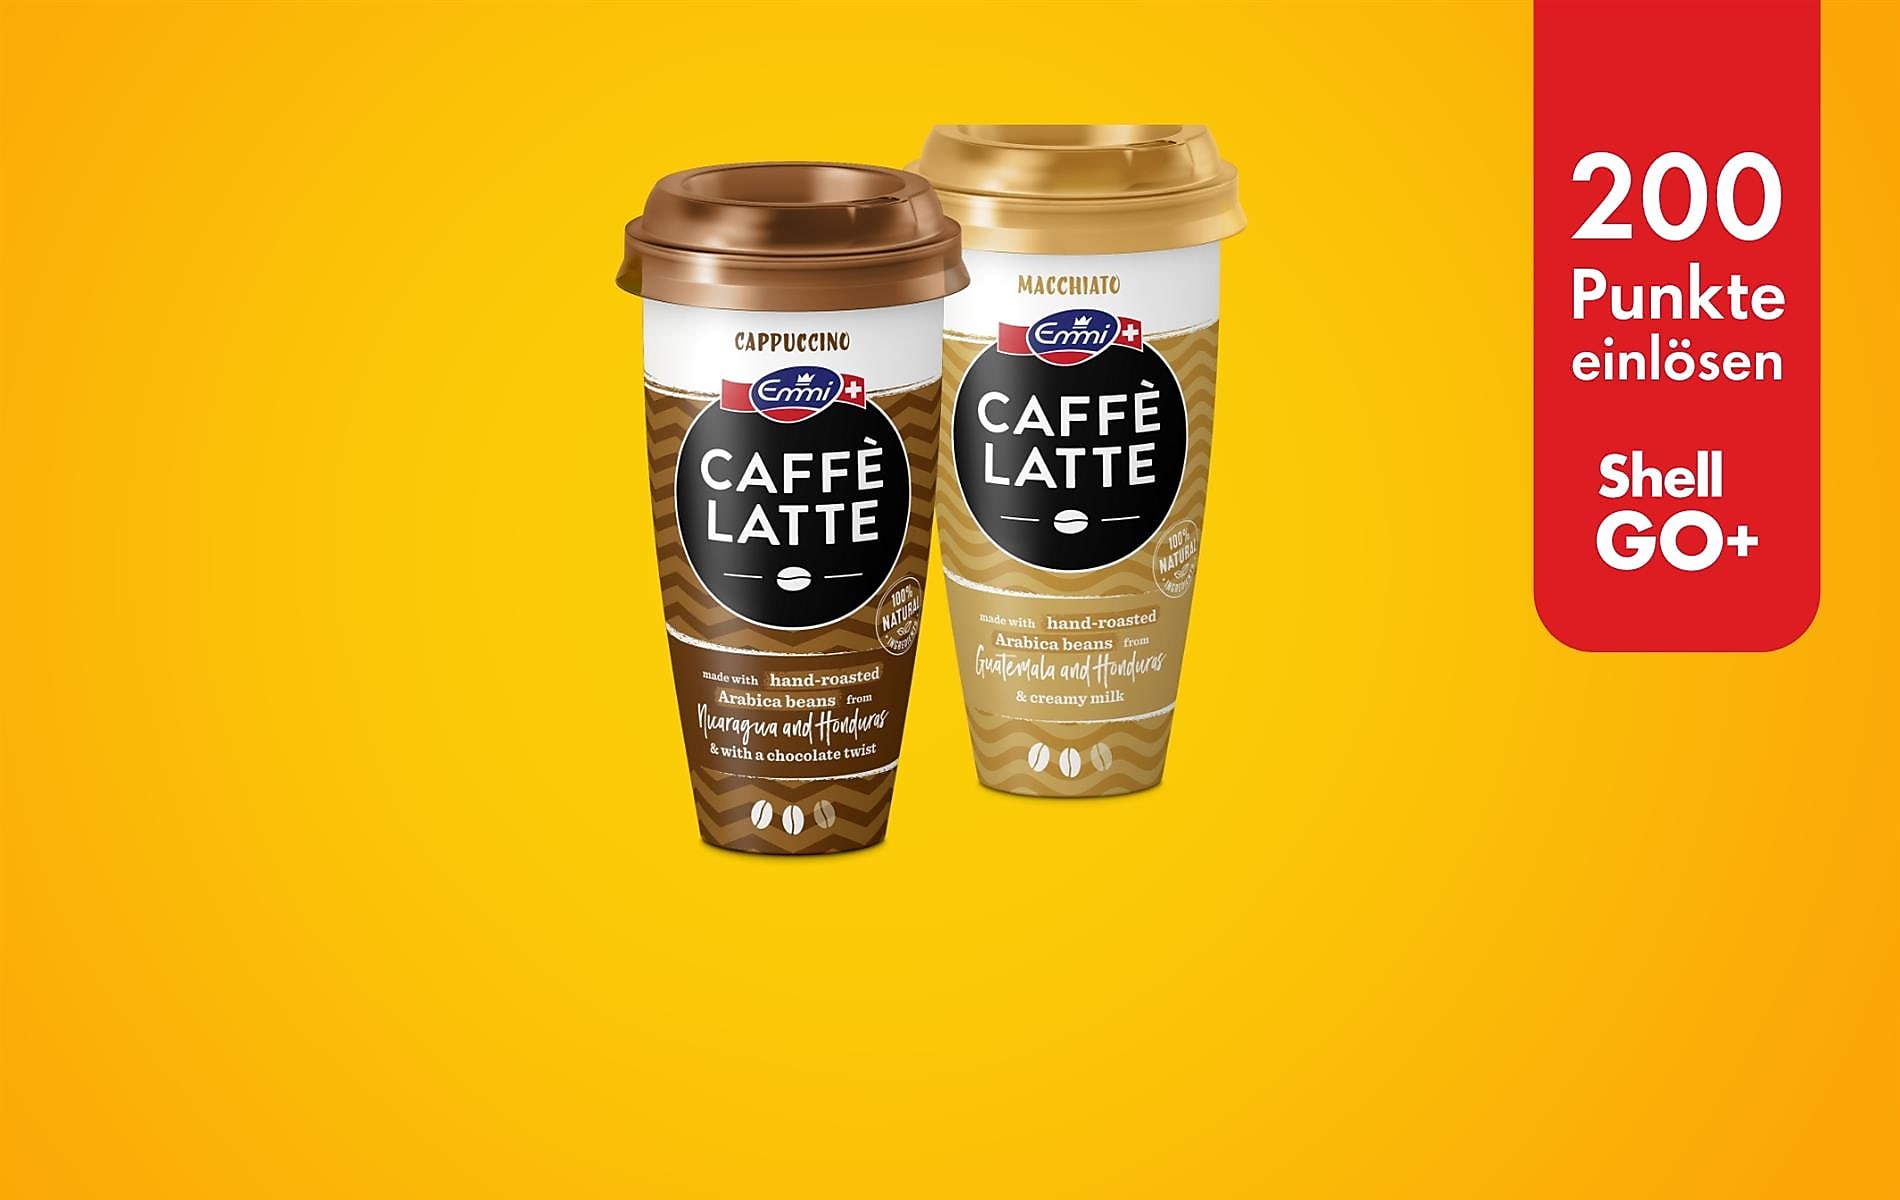 Shell Go+ PunkteDeal: Emmi Caffè Latte um 200 Pkte